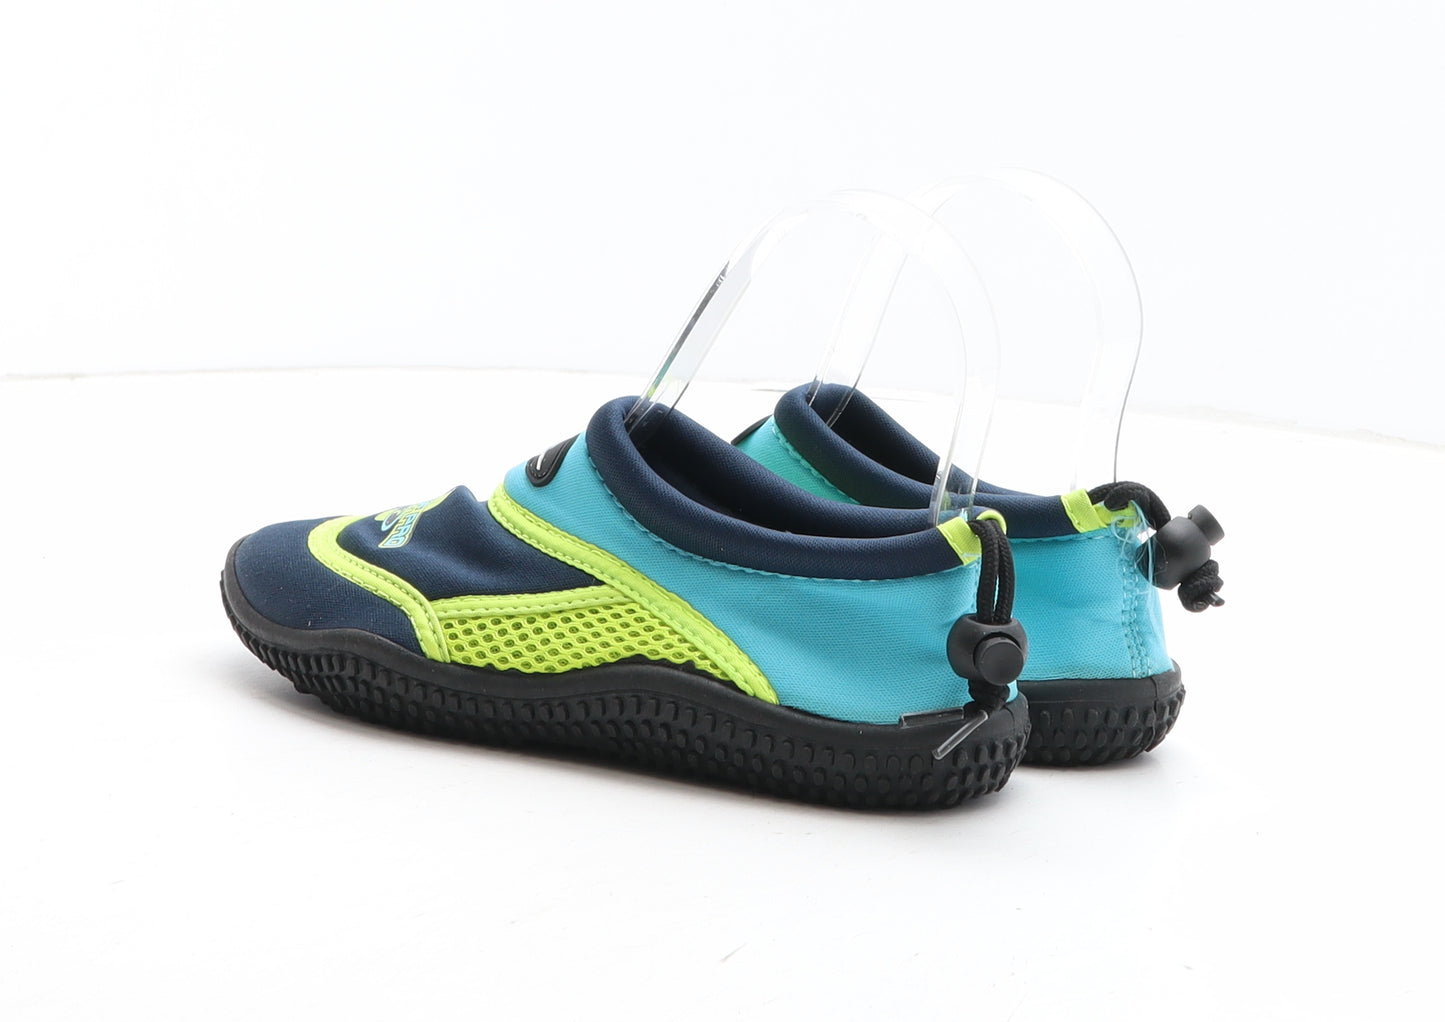 Crane Boys Blue Colourblock Fabric Slip On Casual UK 1 - Aqua Shoes